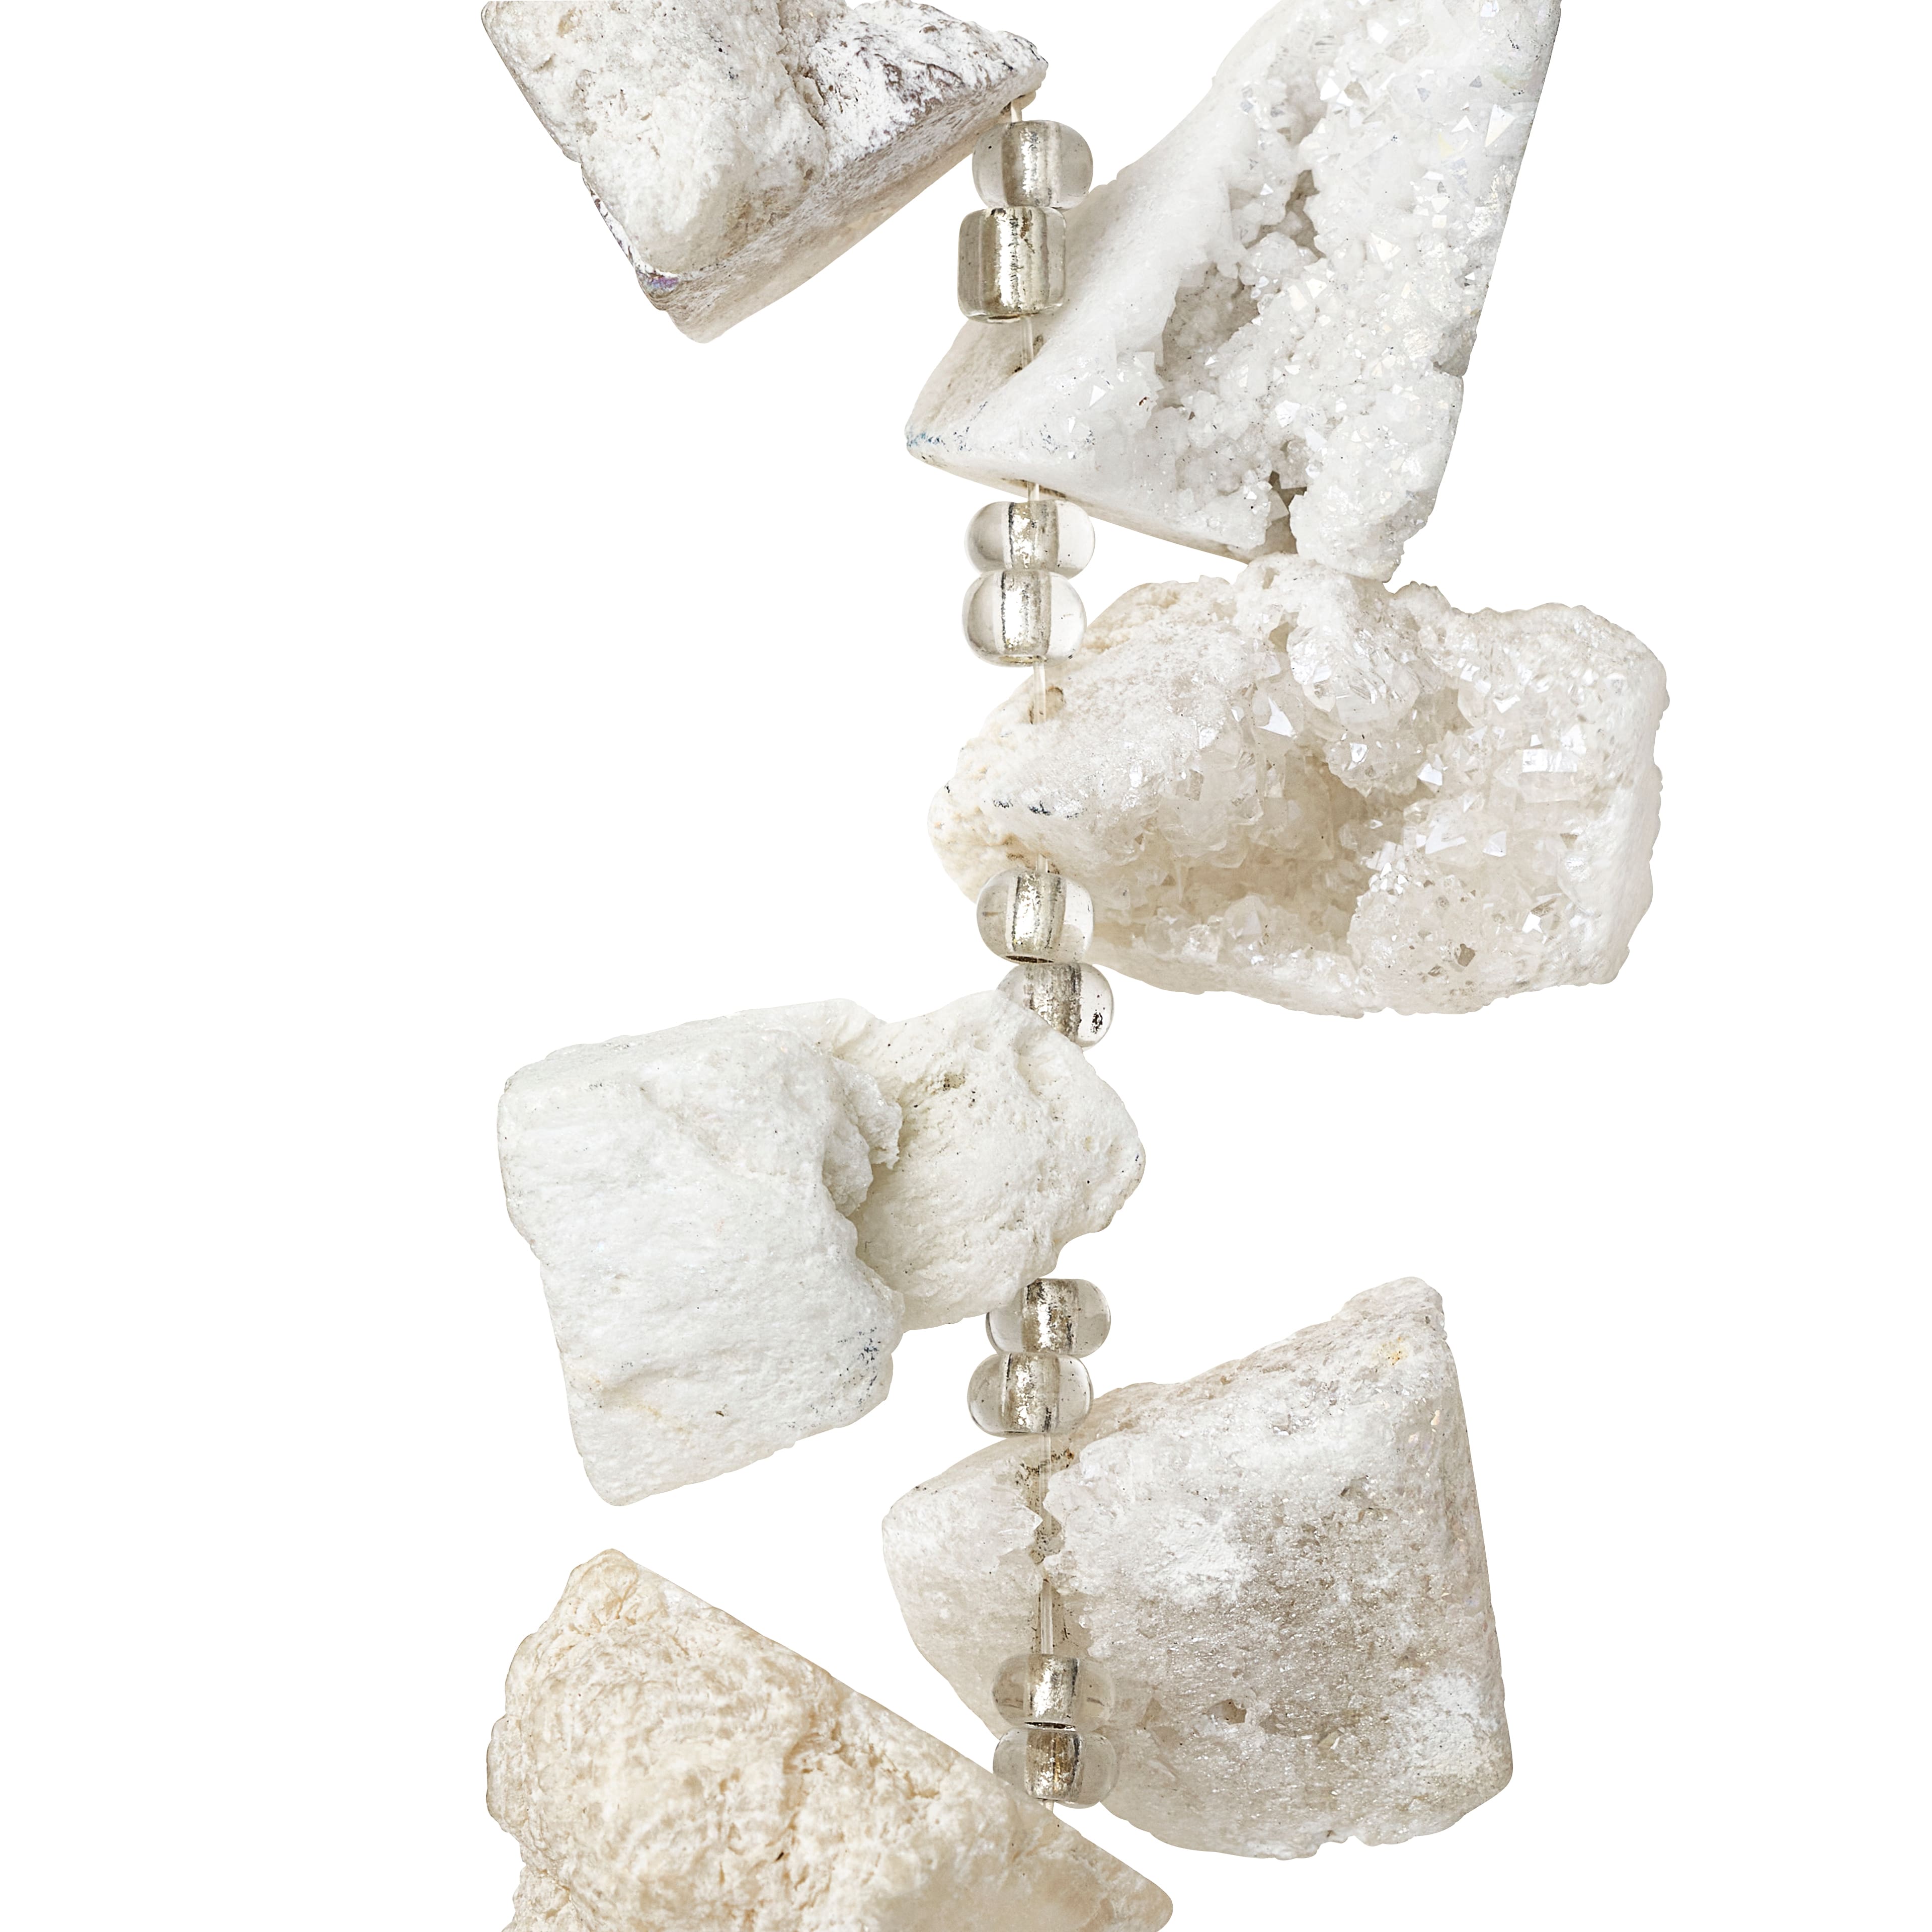 Sedona White Druzy Agate Nugget Beads, 20mm by Bead Landing&#x2122;